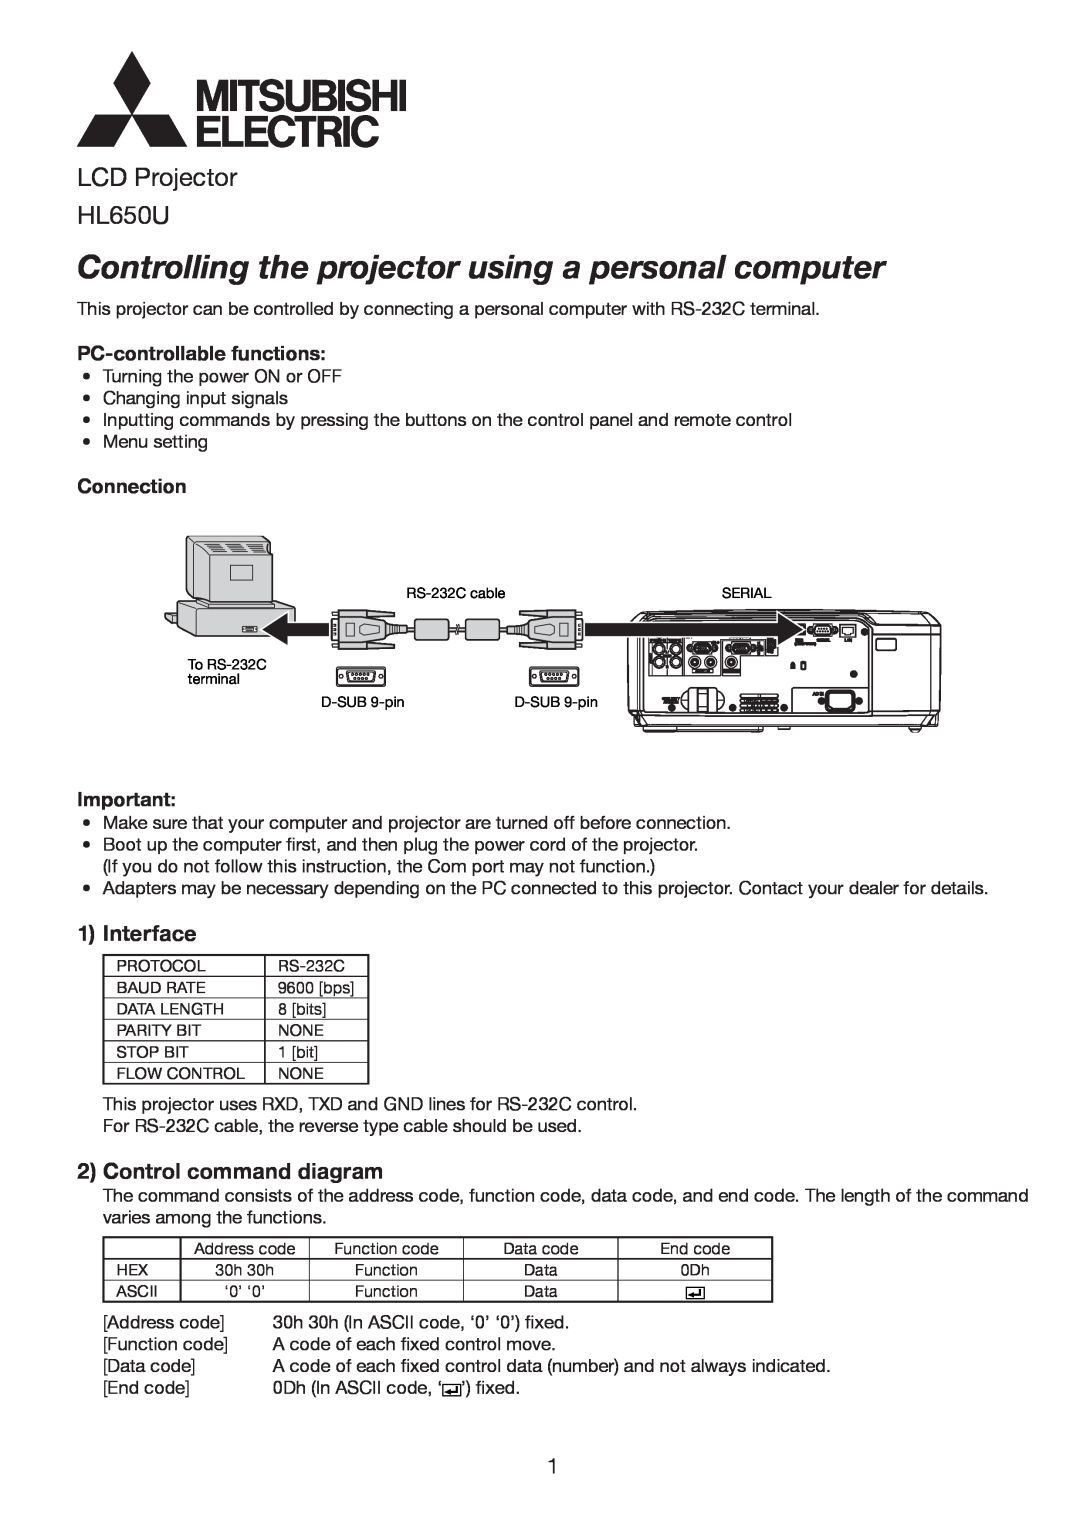 Mitsubishi Electronics user manual LAN Control Utility User Manual for HL650U, Contents, Connection, Installation, EN-1 